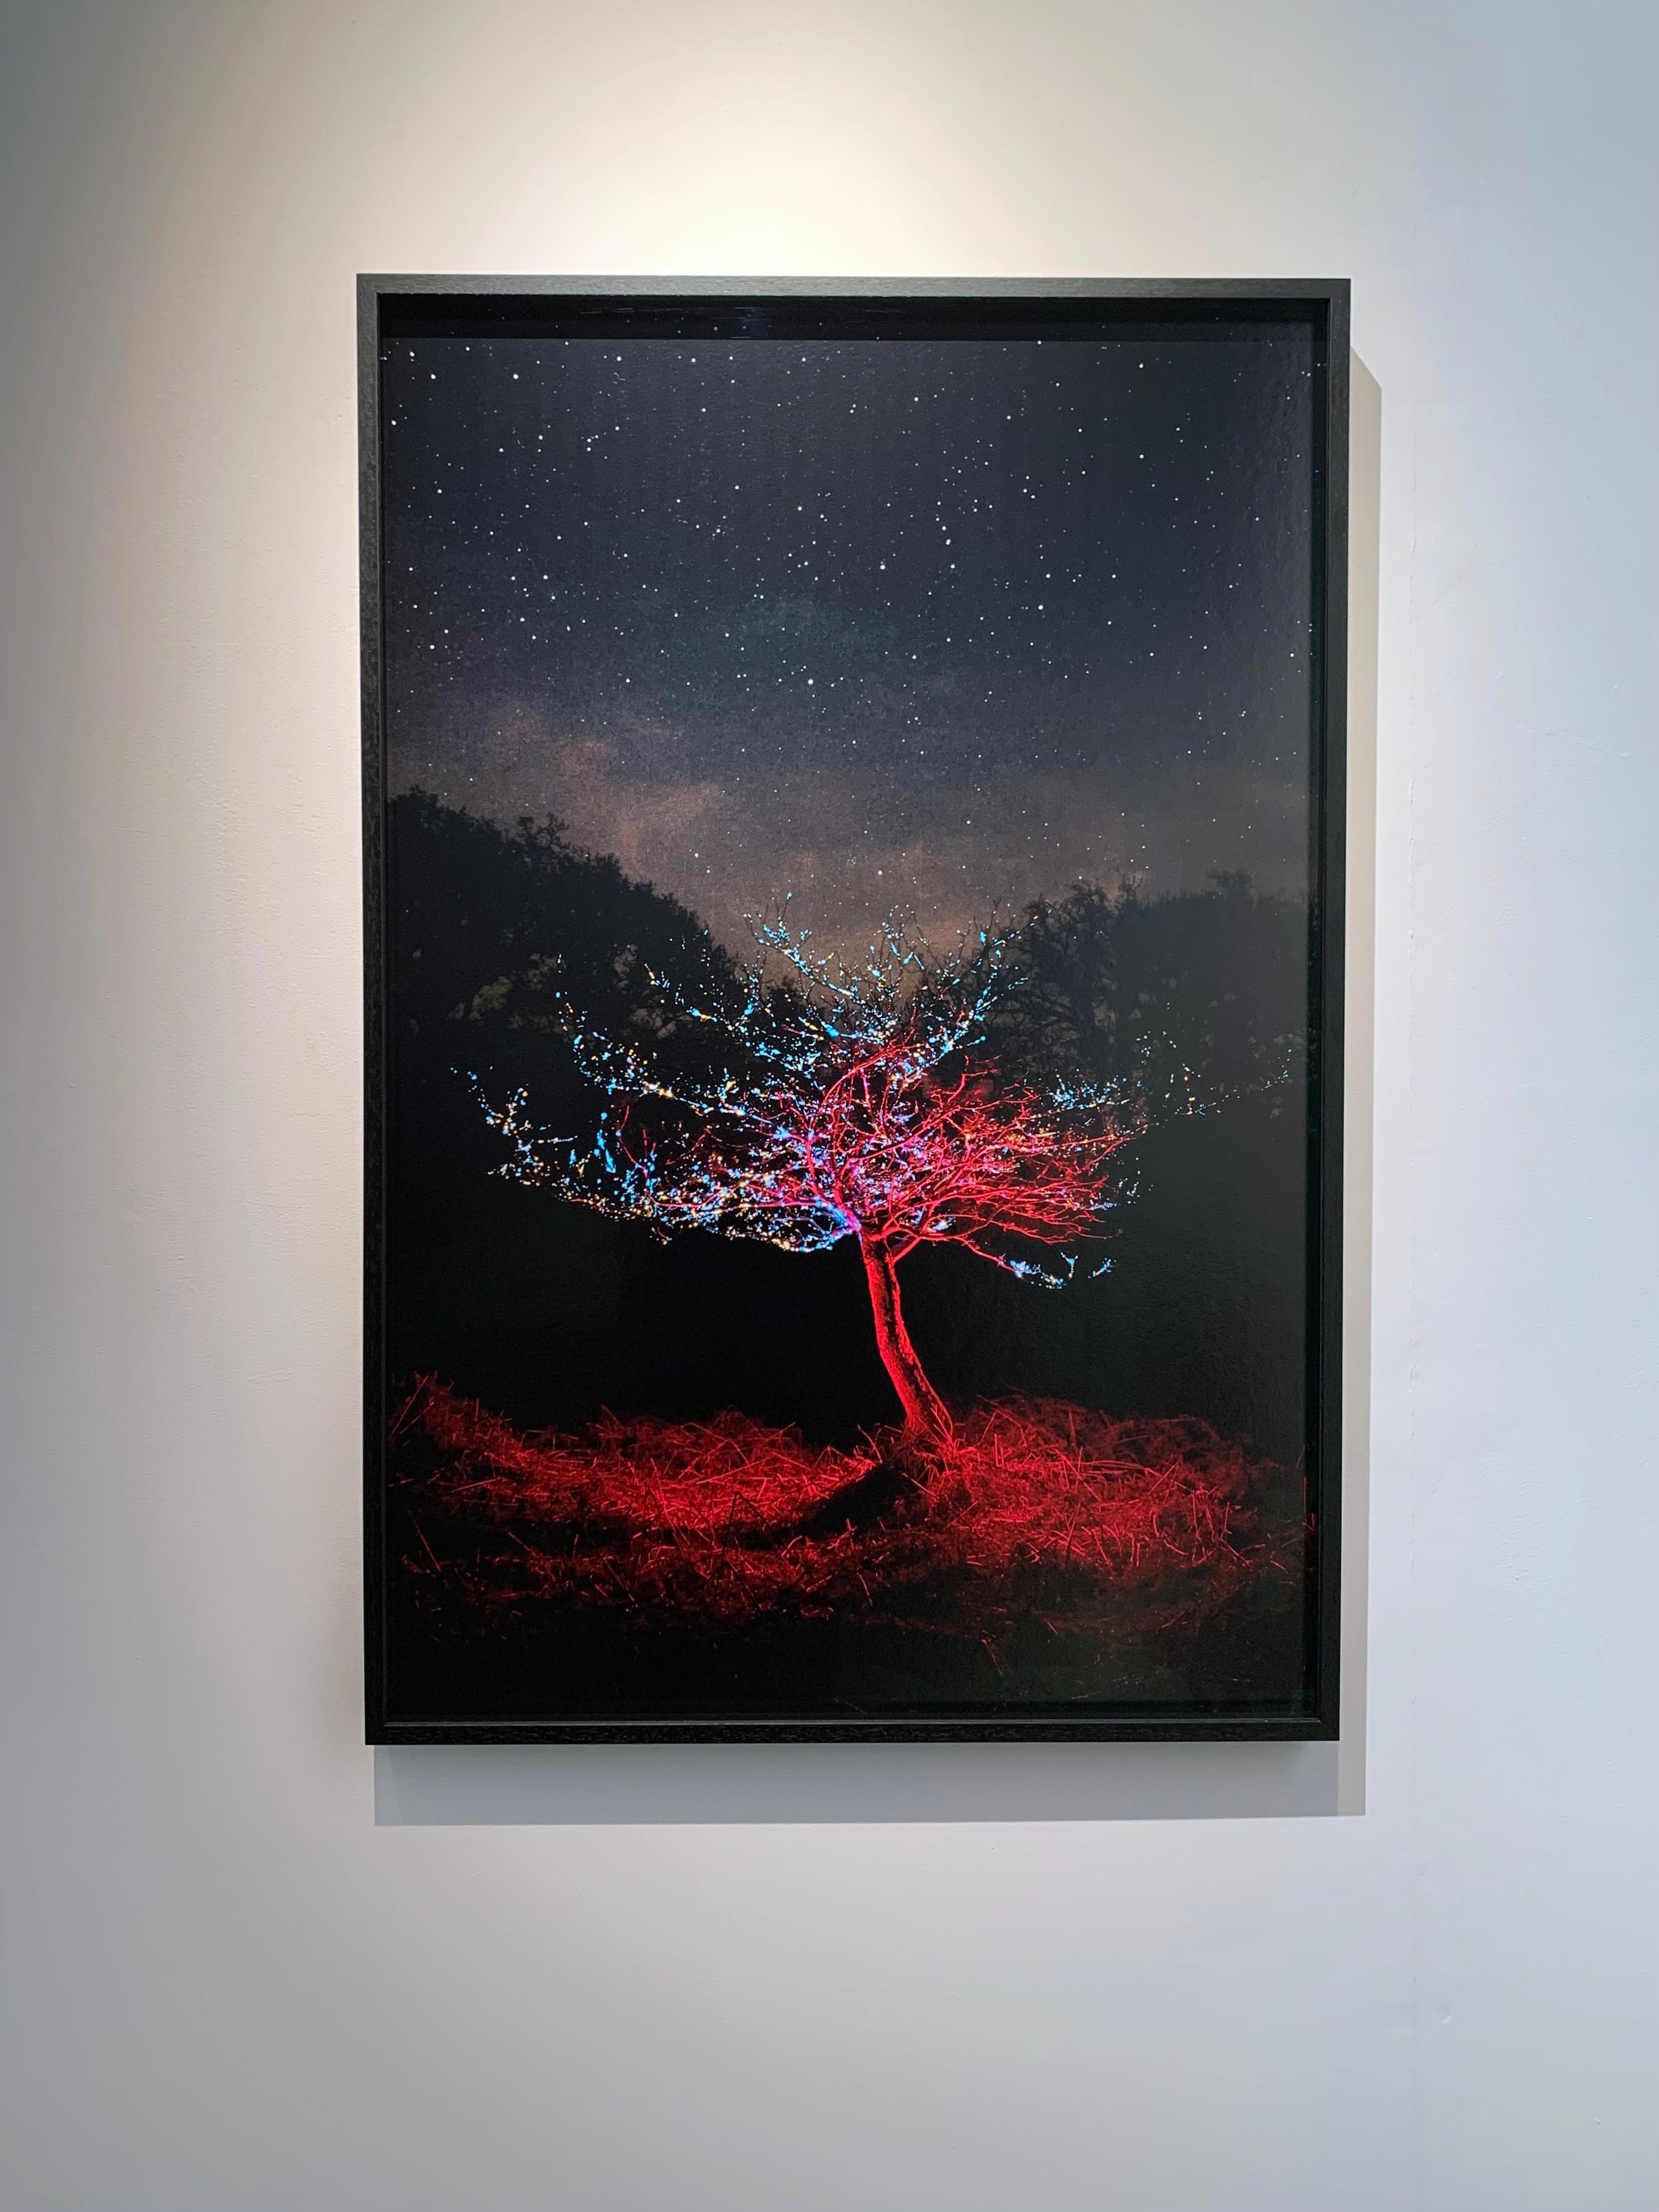 Sci-fi sparkle Red Blue Tree by Night with skylight stars - Impression encadrée - Contemporain Photograph par George McLeod